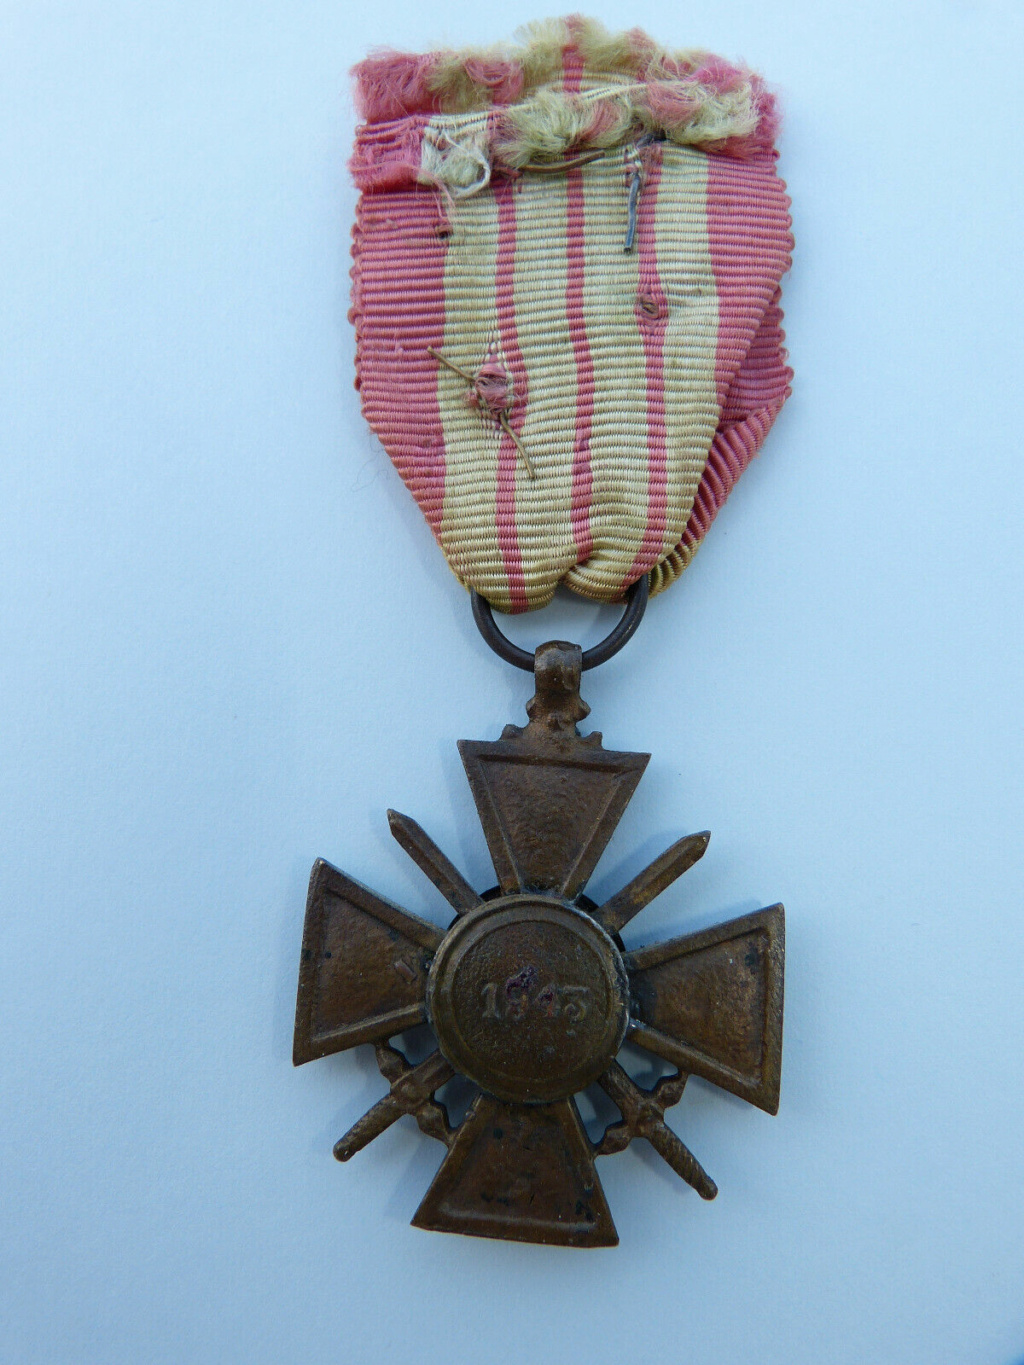  Authentification croix de guerre "Giraud" 215